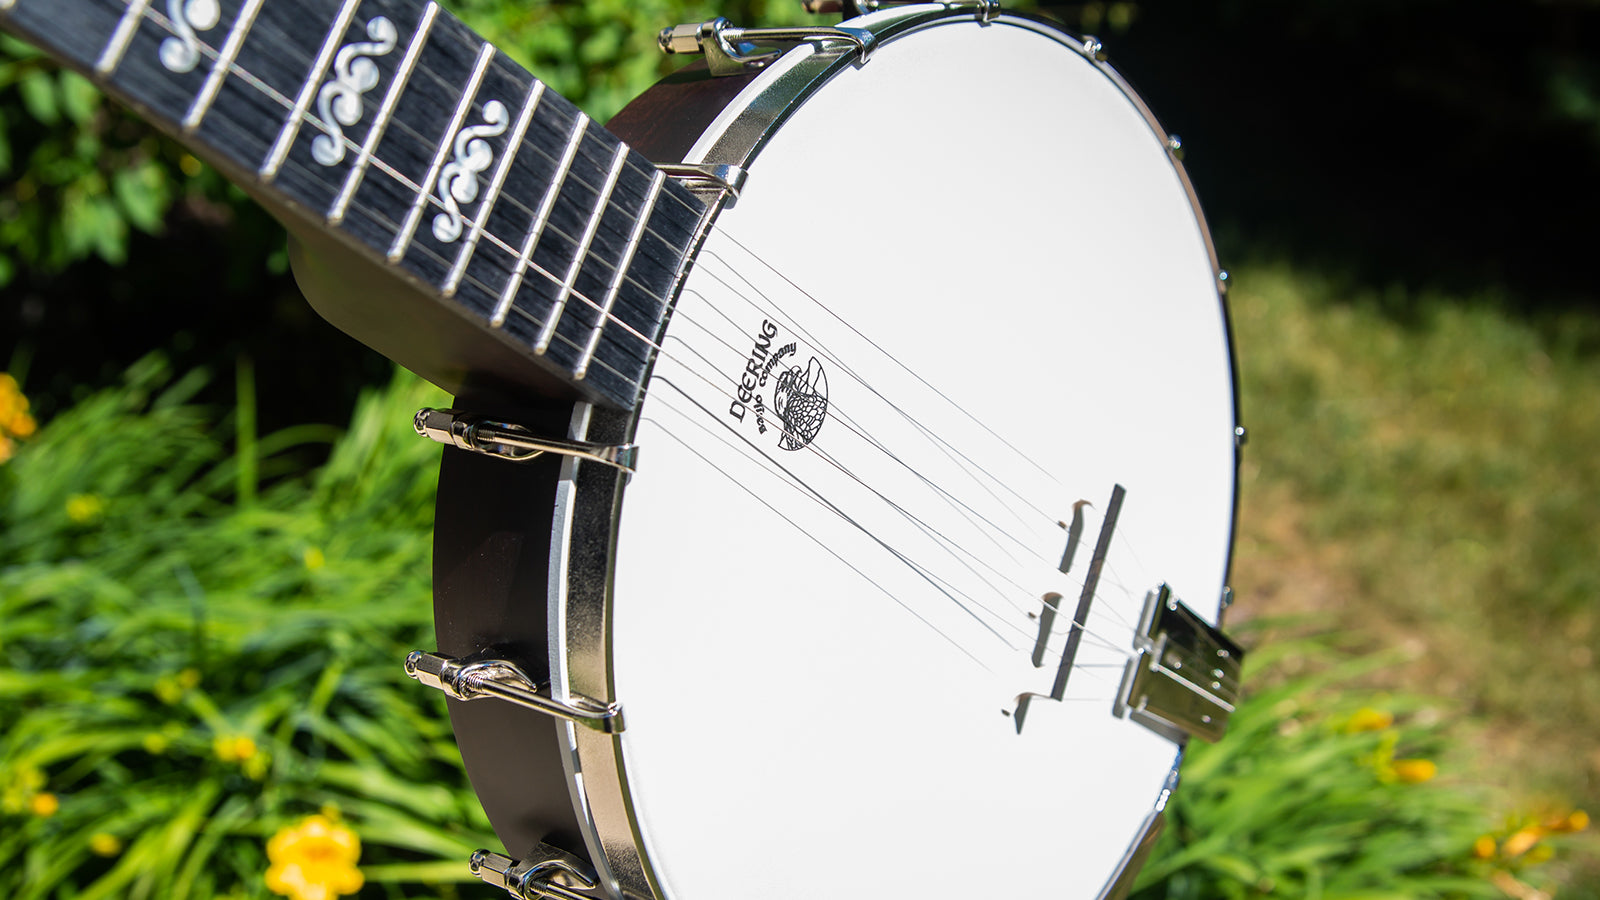 A Deering banjo in an outdoor setting